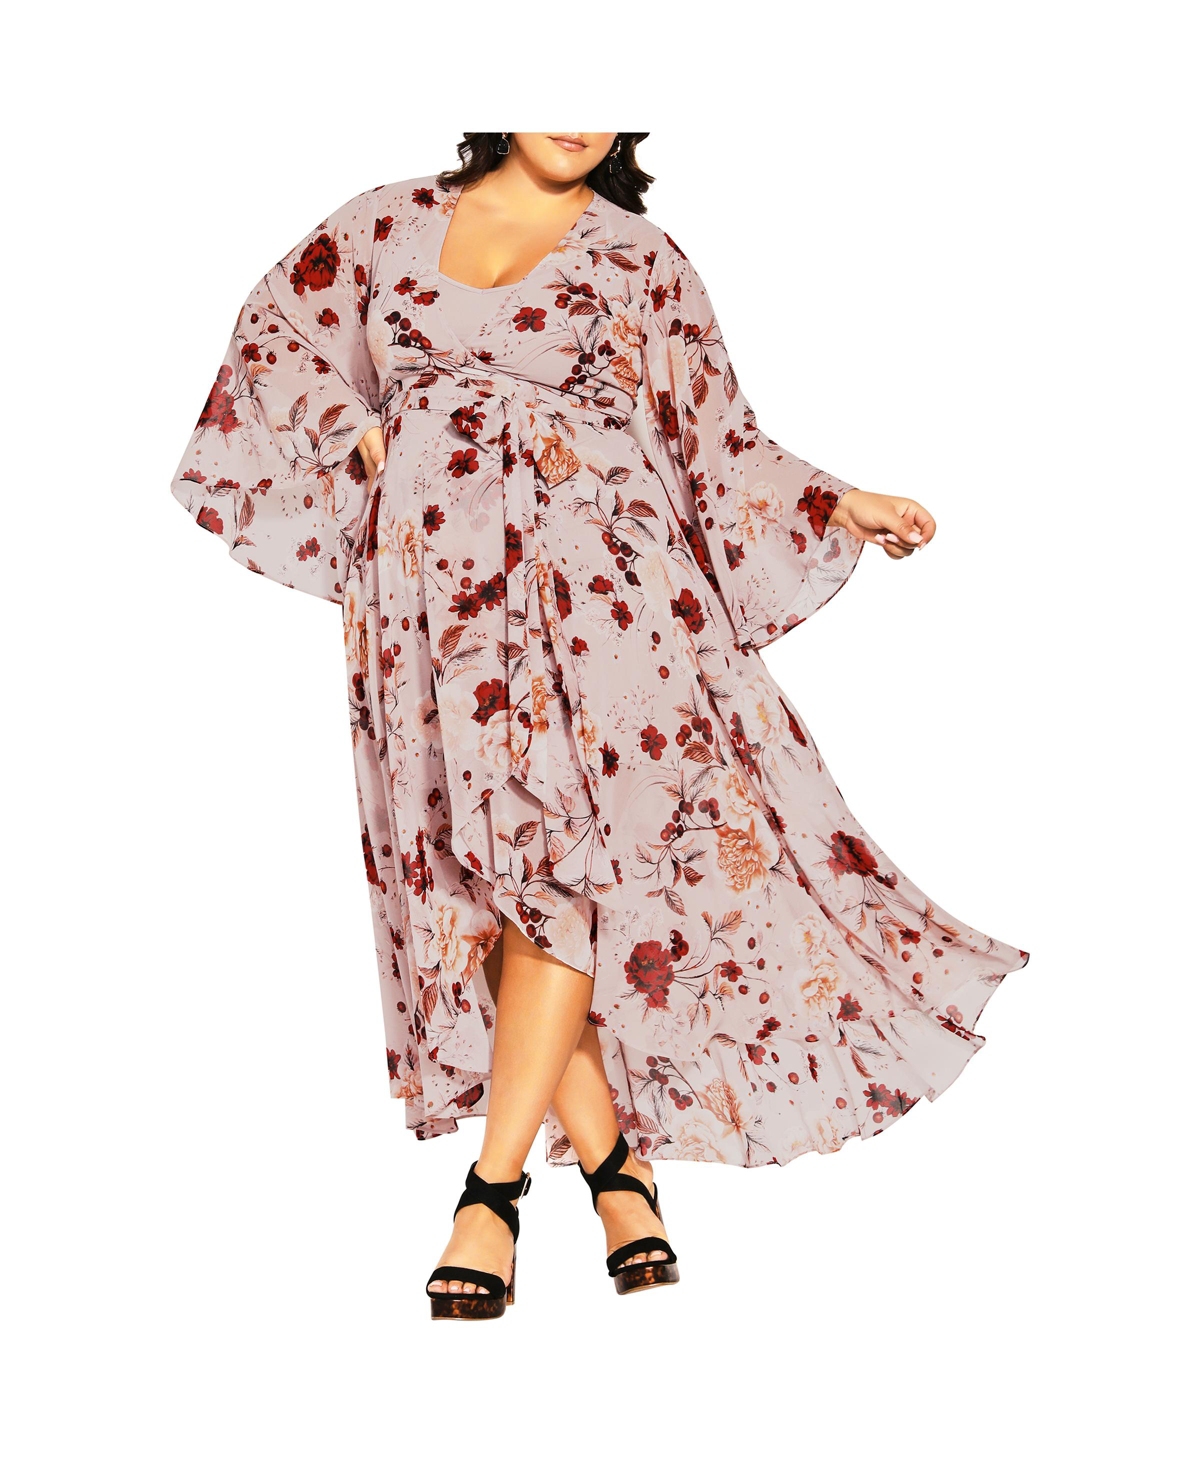 Women's Jemma Maxi Dress - Champagne berry floral